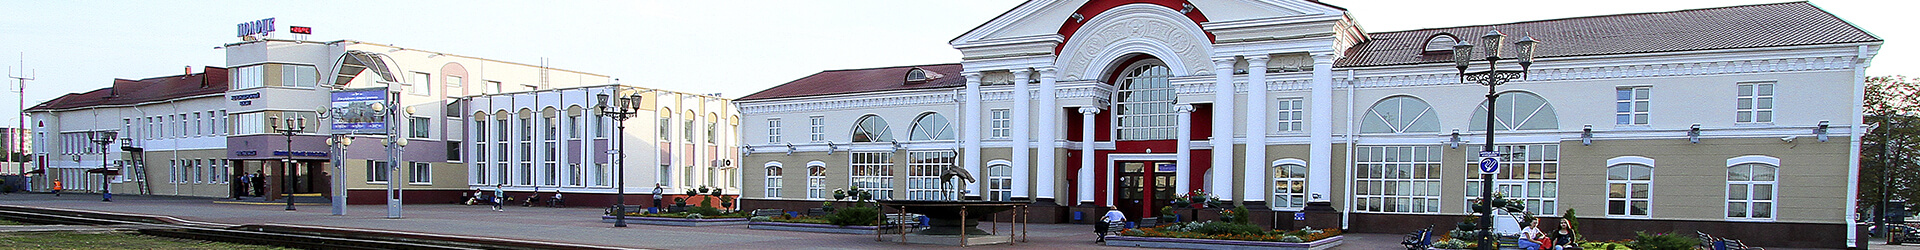 Вокзал станции Полоцк